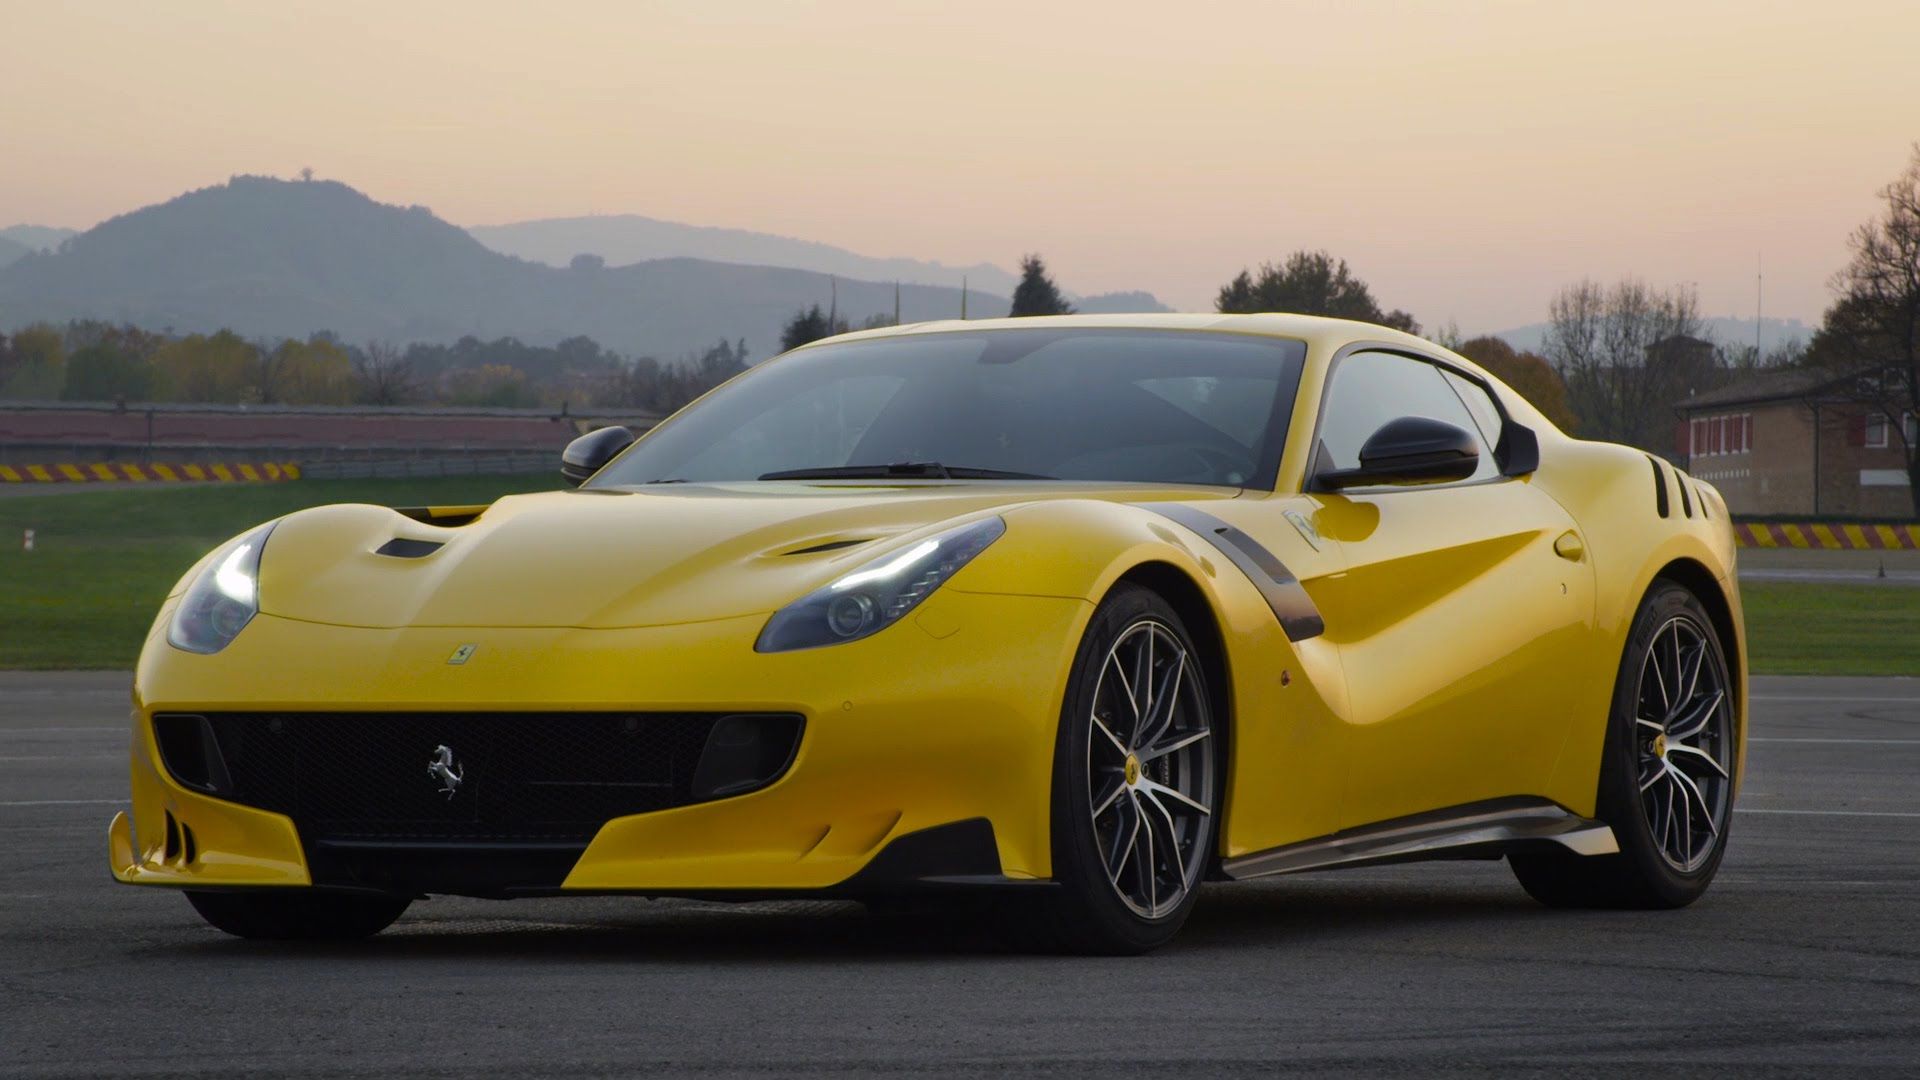 VIDEO: Ferrari F12tdf. The Most Extreme Ferrari?. Ferrari